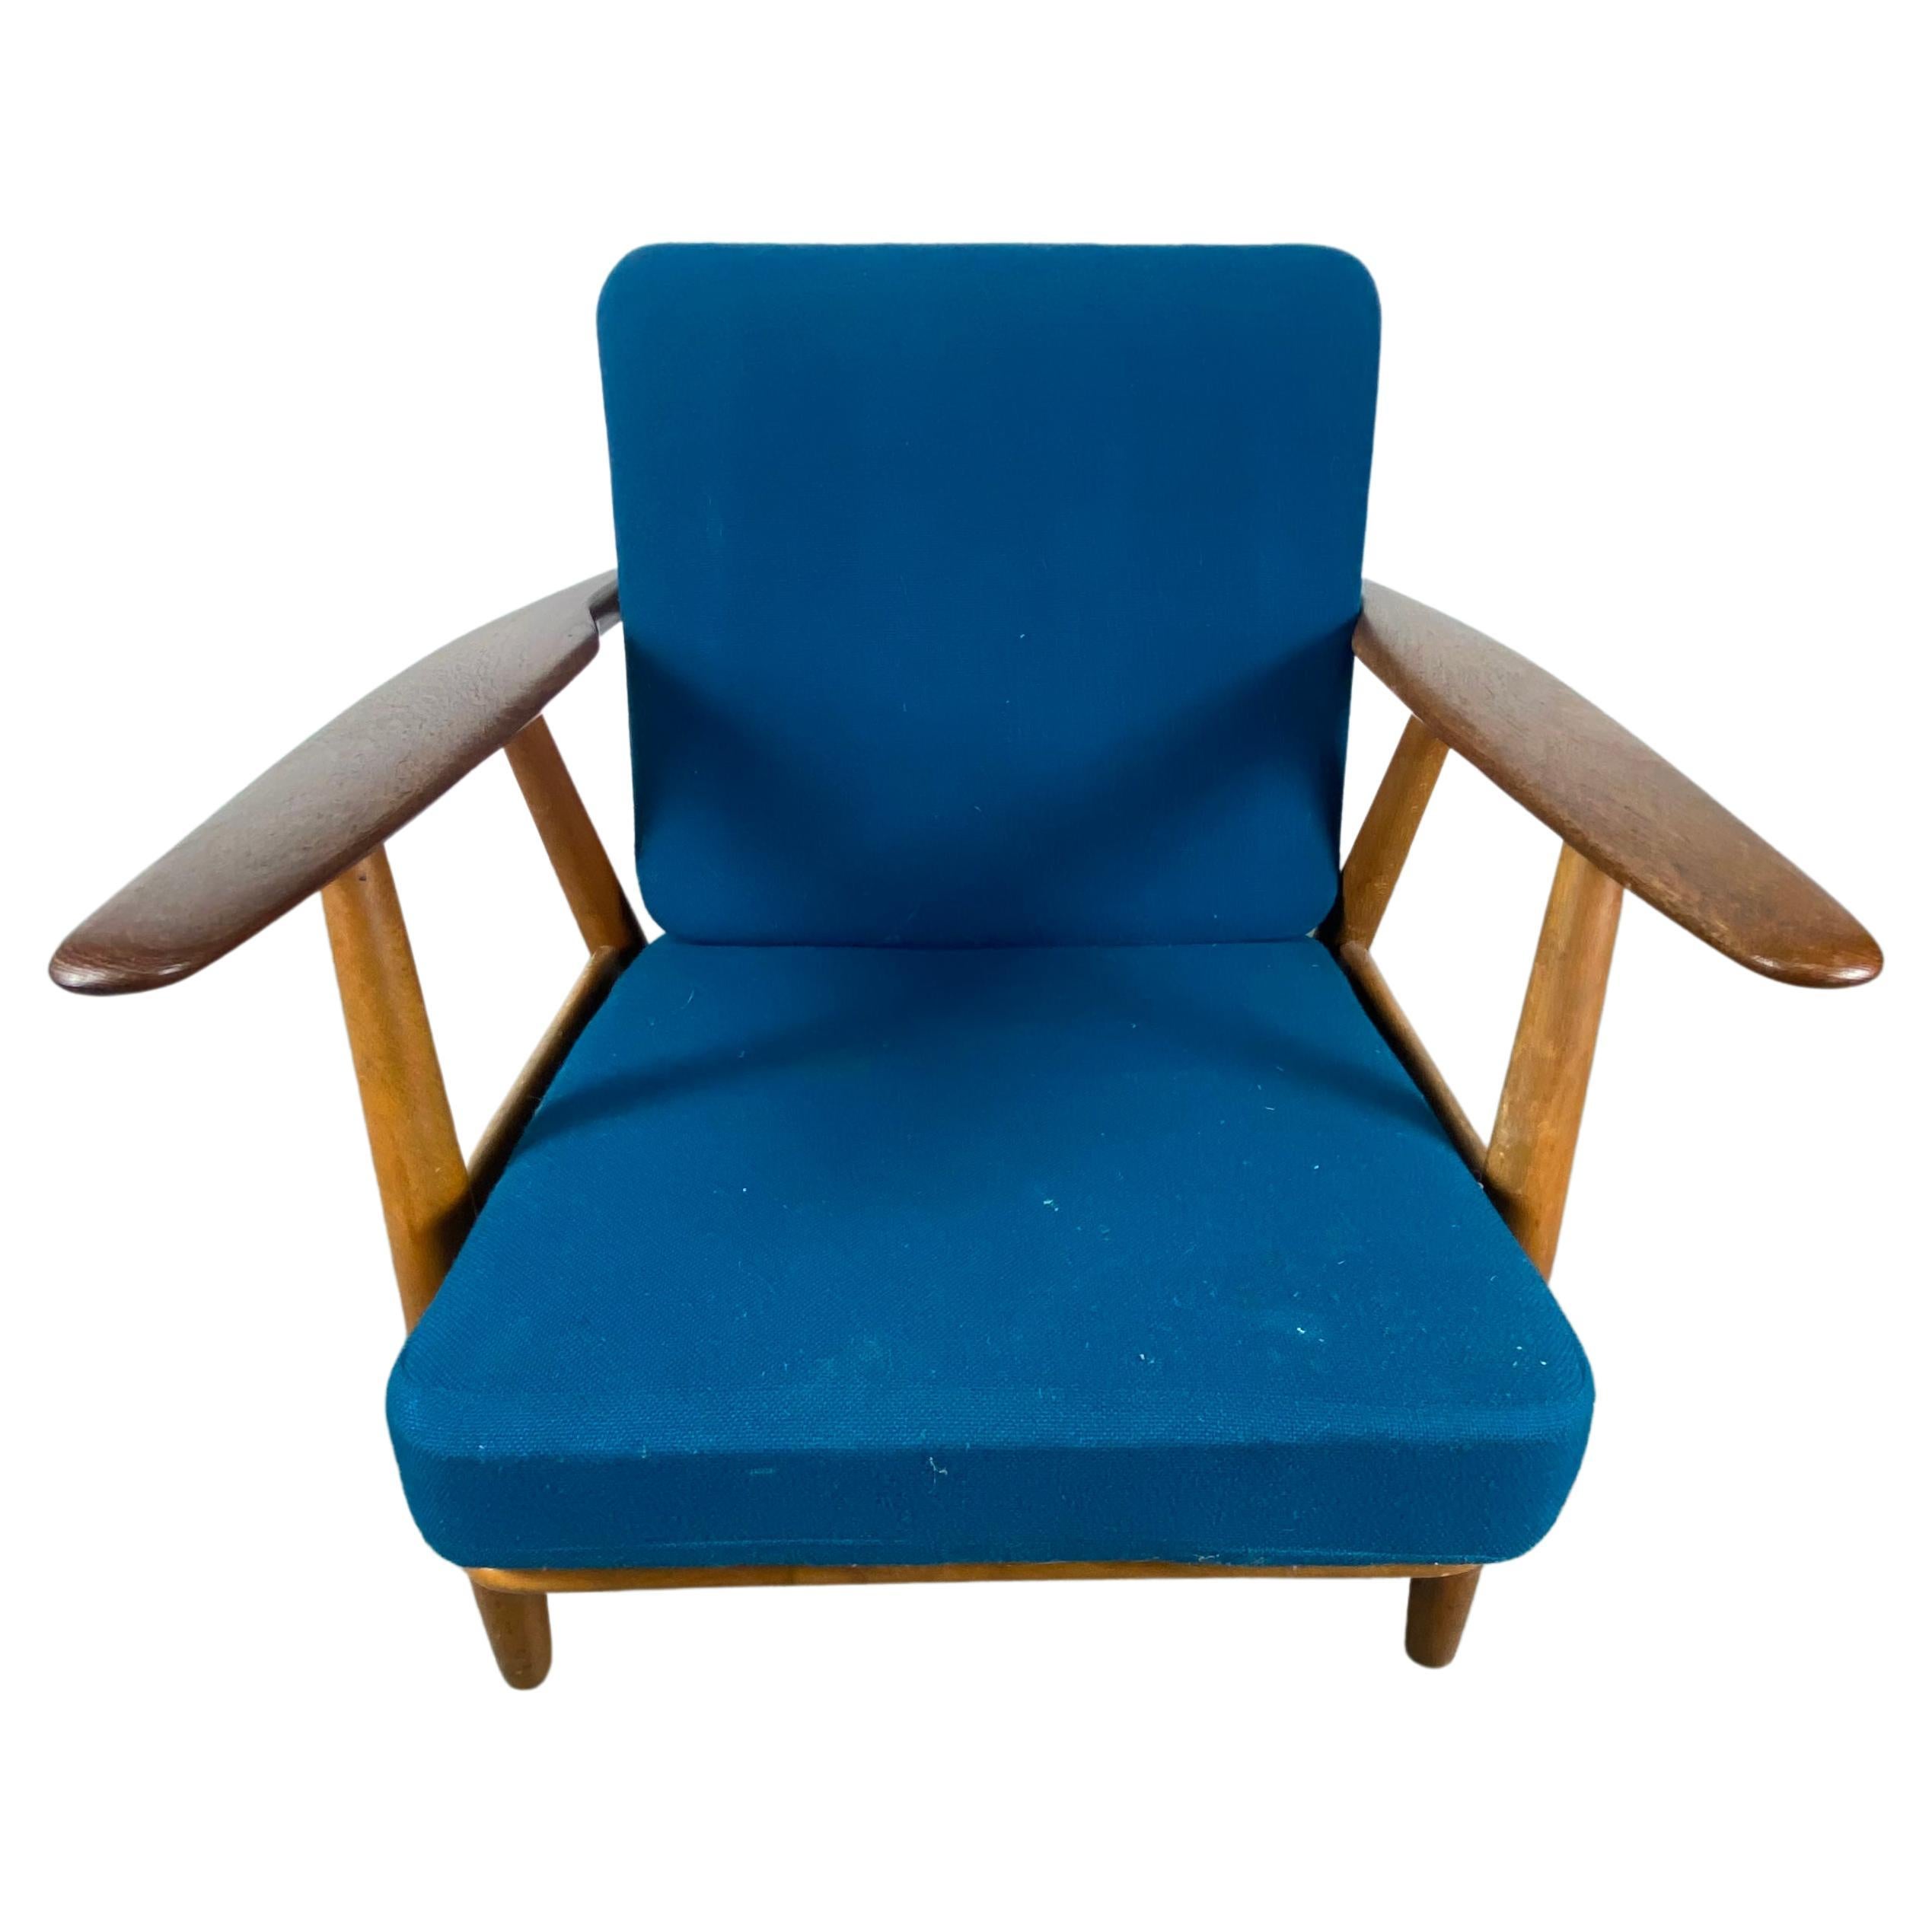 Early Production Hans Wegner Getama GE-240 Lounge Chair / Denmark